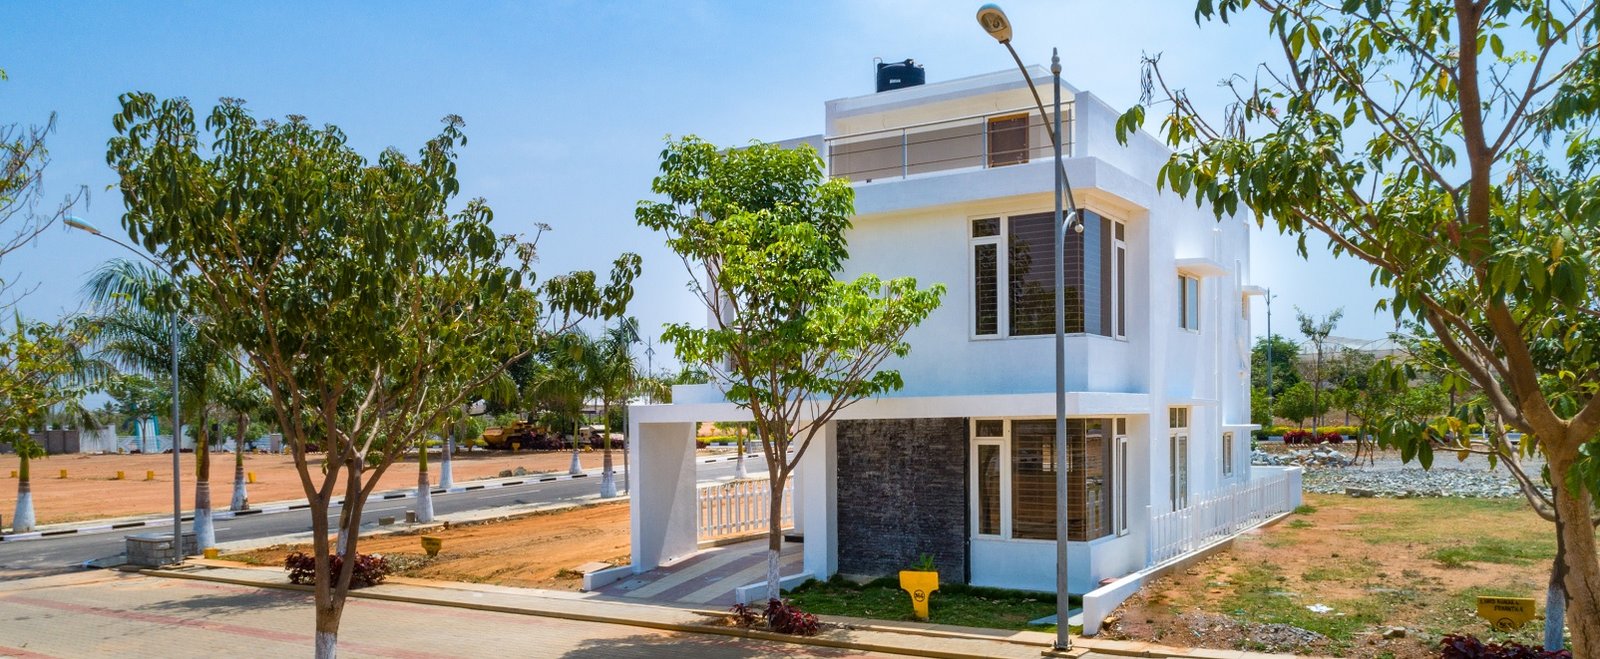 Villas for sale near Electronic city Bangalore